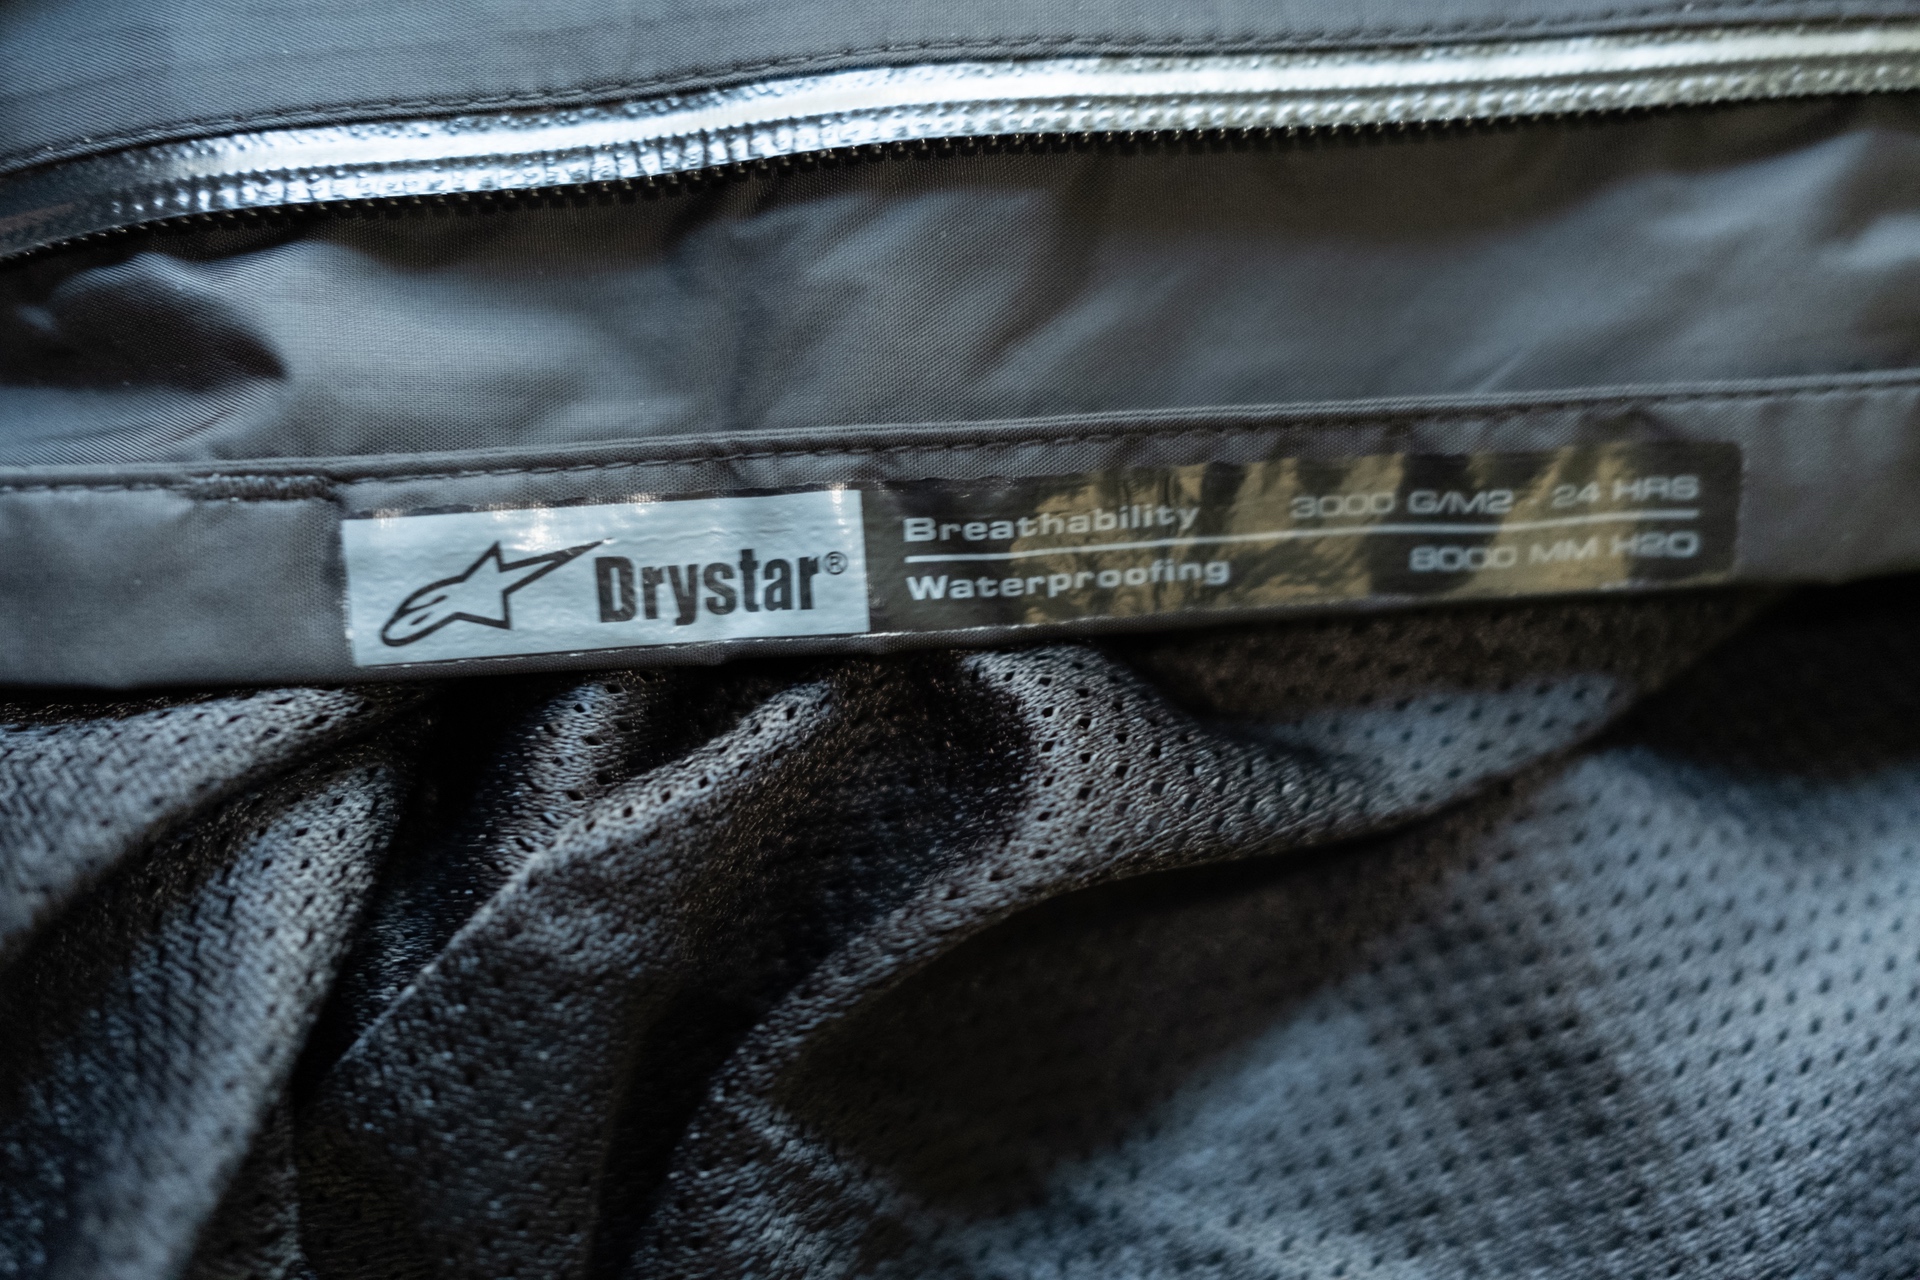 Review: “The Decathlete” Alpinestars Halo Drystar Jacket